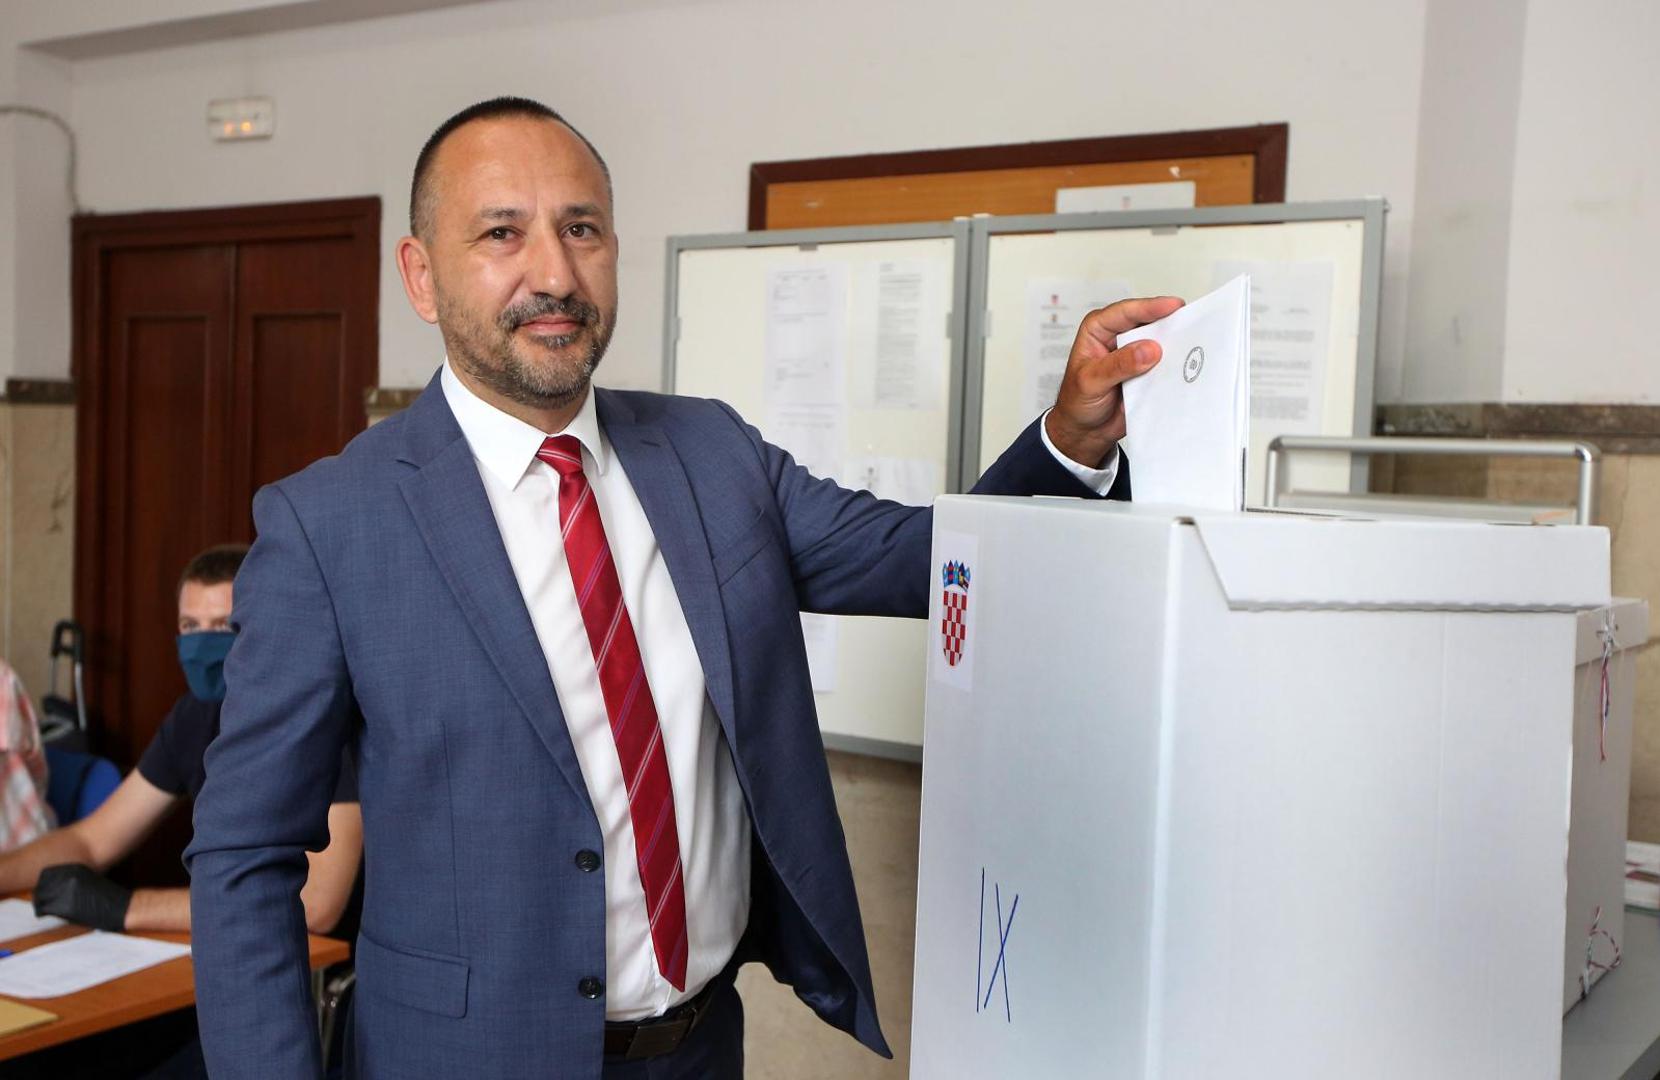 05.07.2020., Sibenik - Hrvoje Zekanovic glasovao na parlamentarnim izborima. Photo: Dusko Jaramaz/PIXSELL